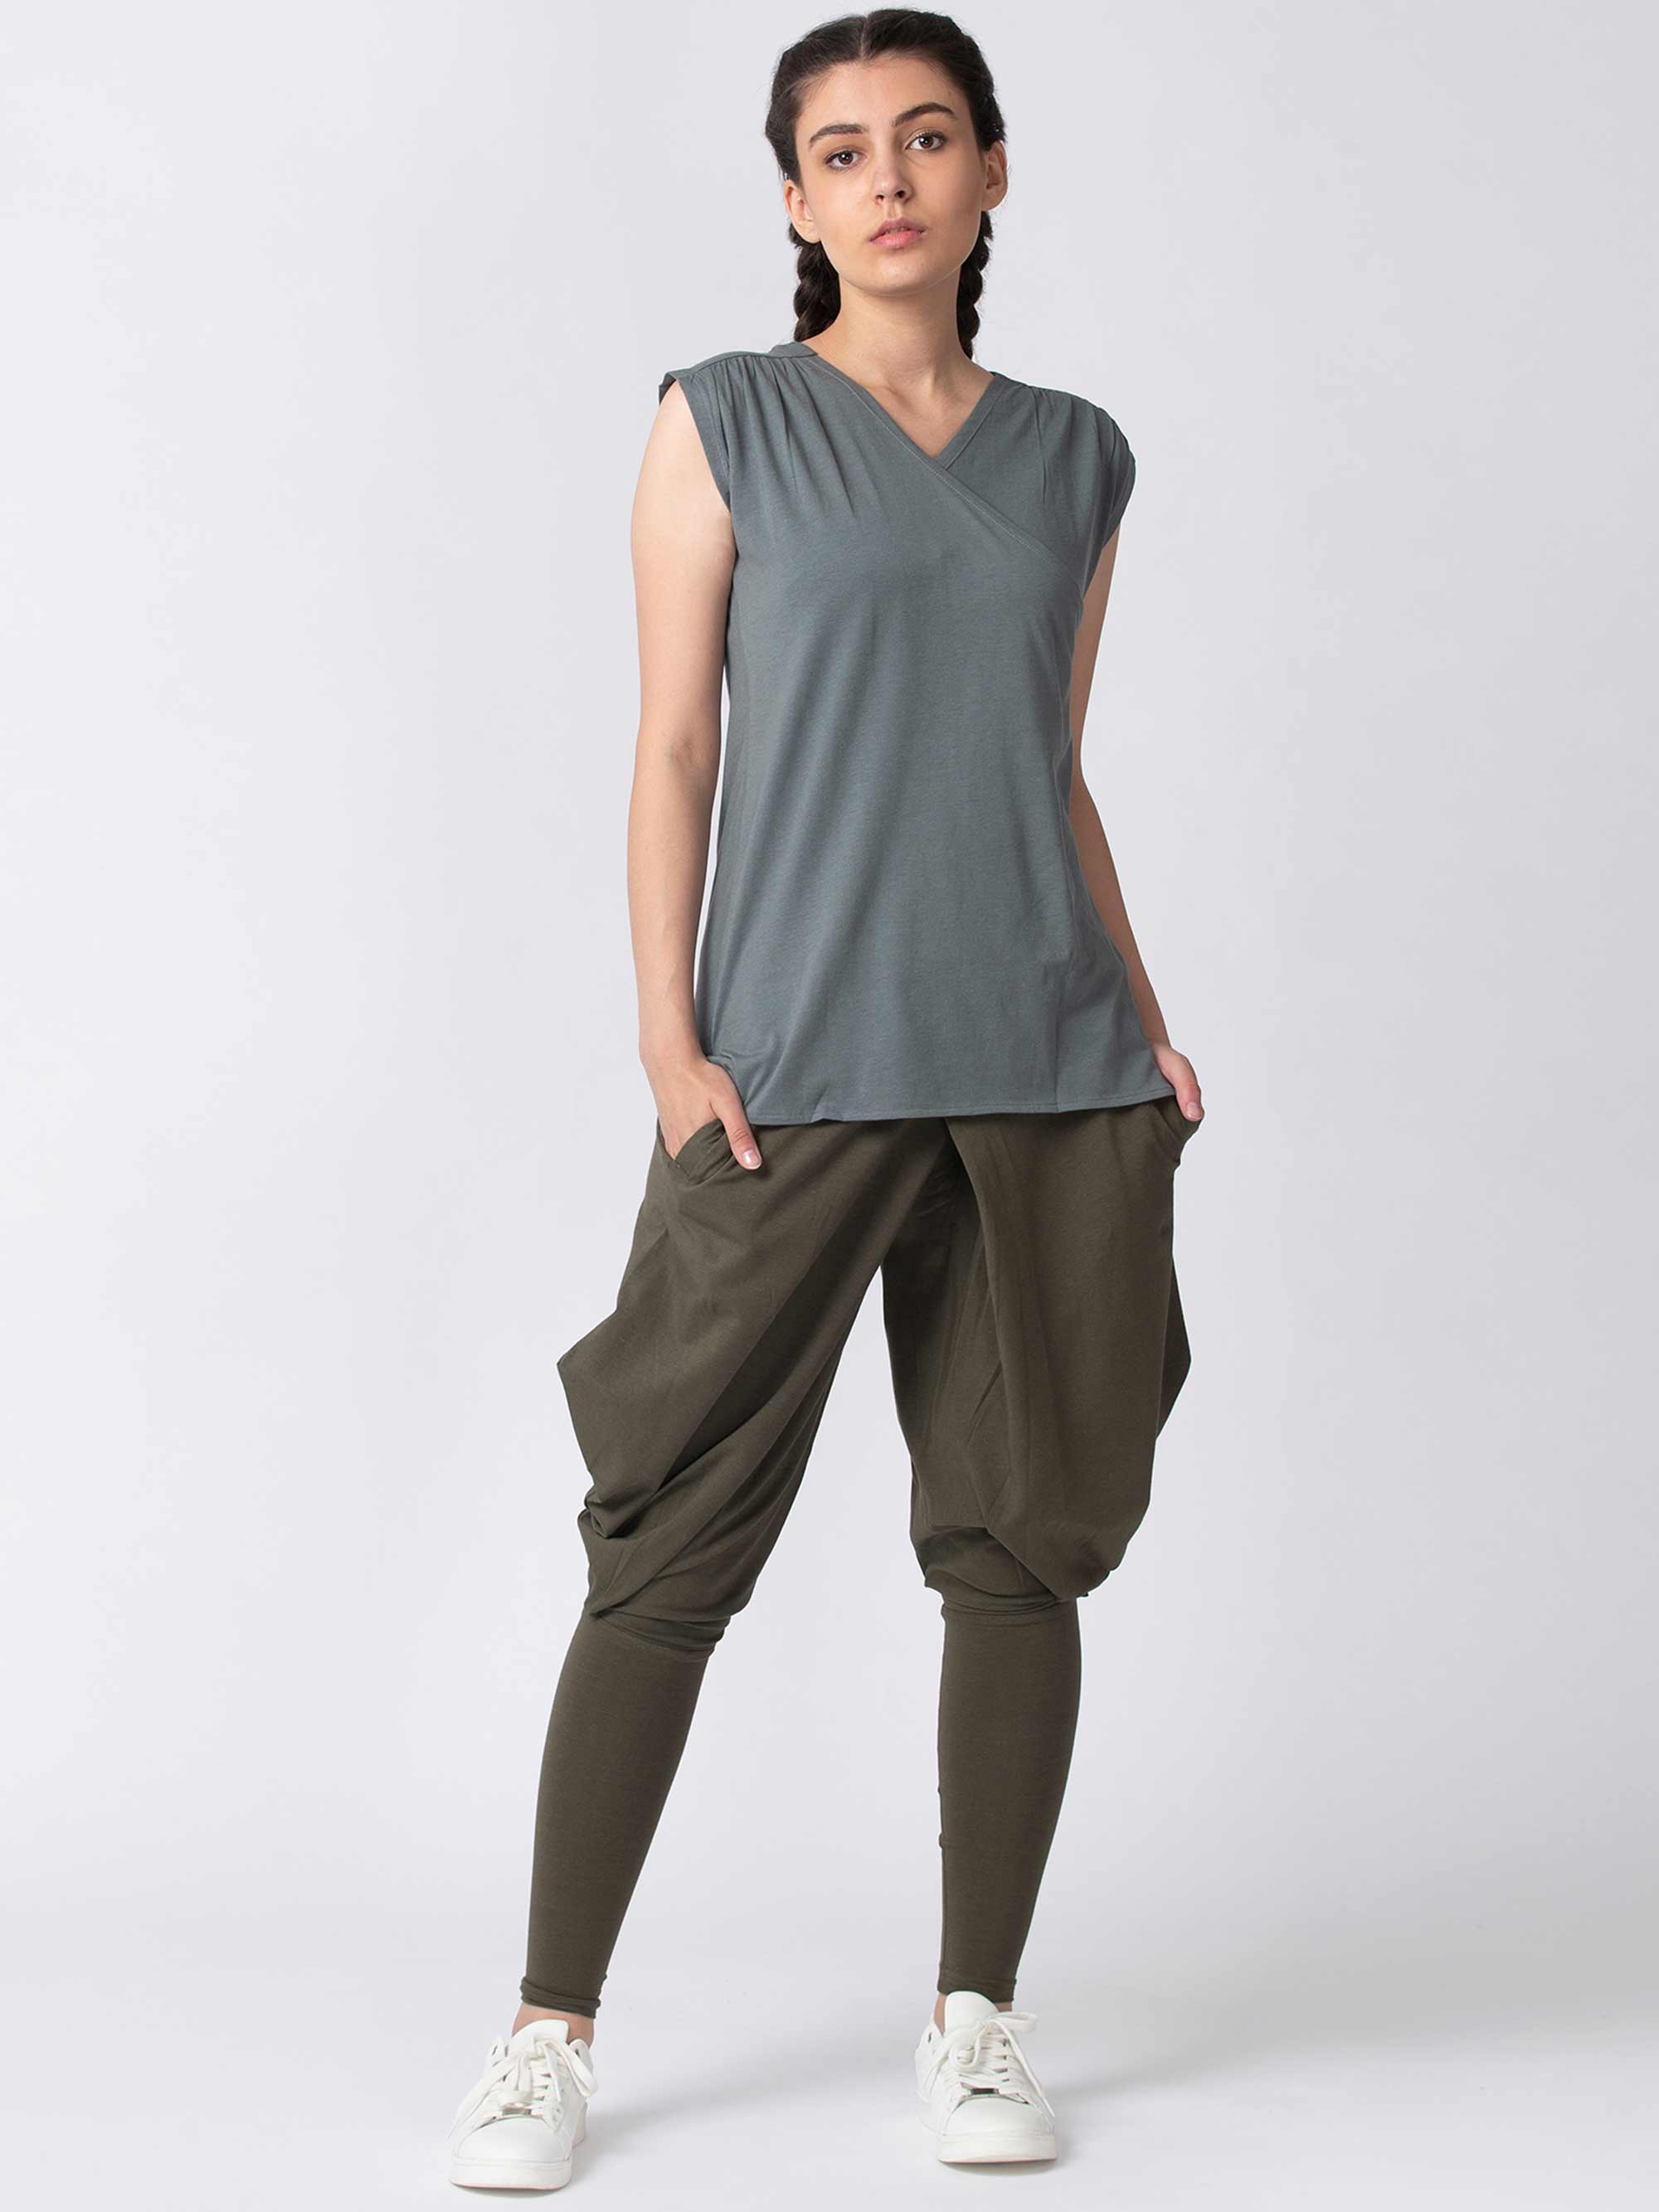 Shop Organic Cotton Yoga Dress for Women & Men - Proyog